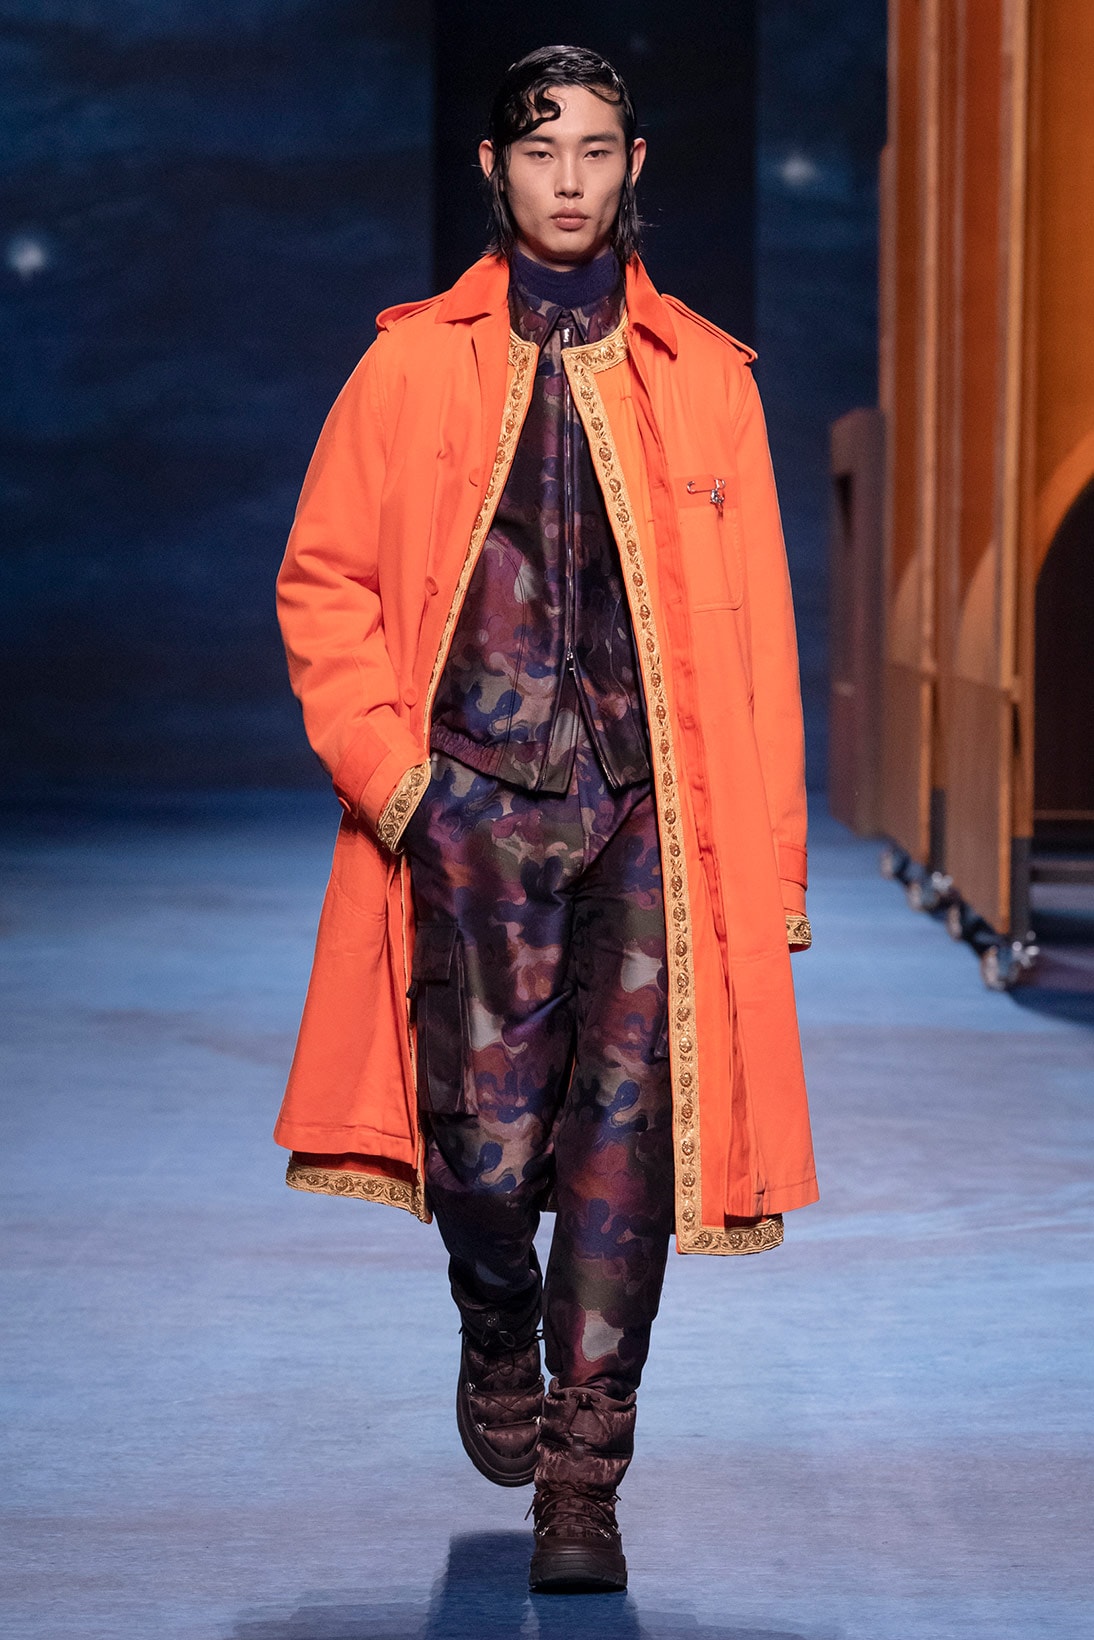 dior mens fall winter collection paris fashion week pfw kim jones runway show jackets coats hats bags pants